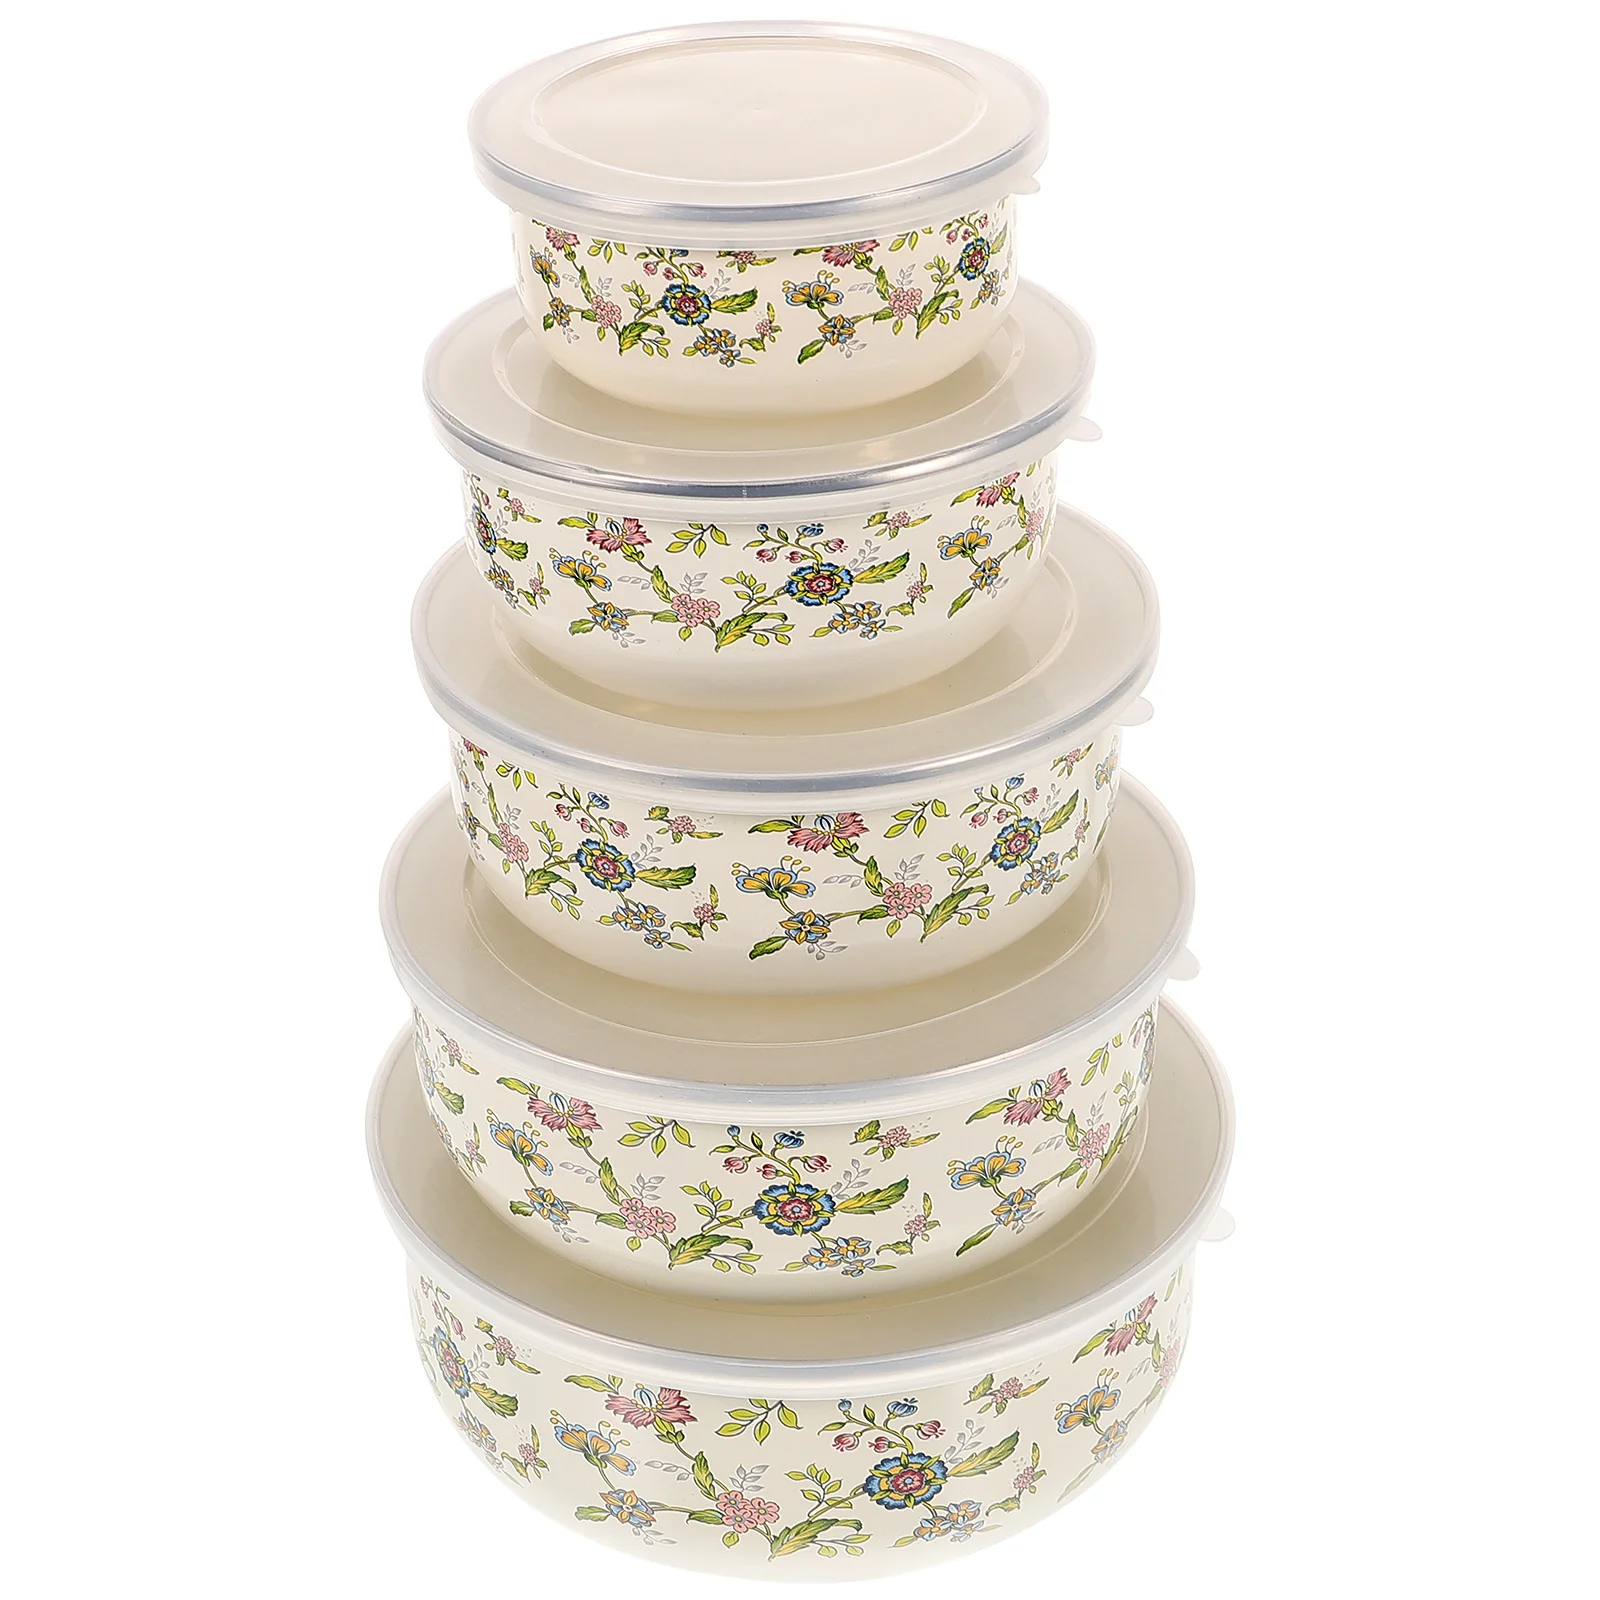 

5 Pcs Fruit Bowl Salad Bowls Lunch Lids Enamel Plate Set Storage Large Mixing Kitchen Serving Nesting